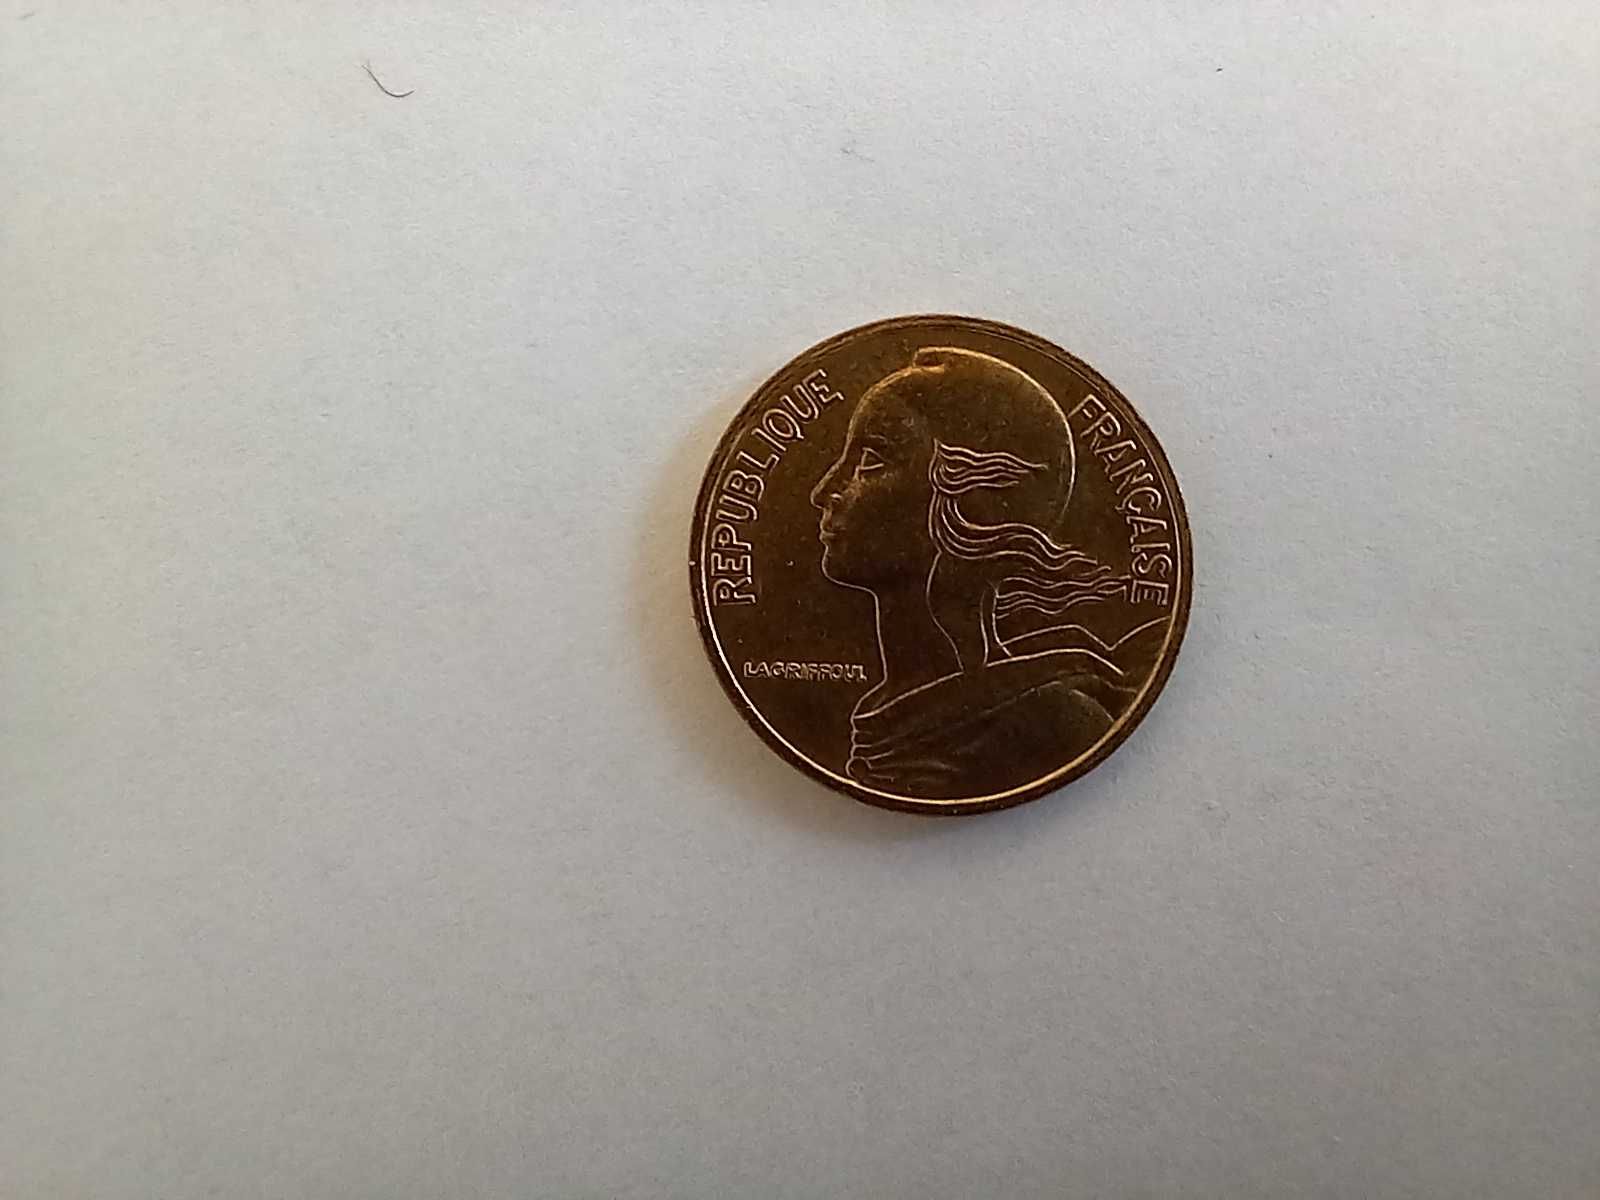 Moneta Francja - 5 centymów 1998 /24/